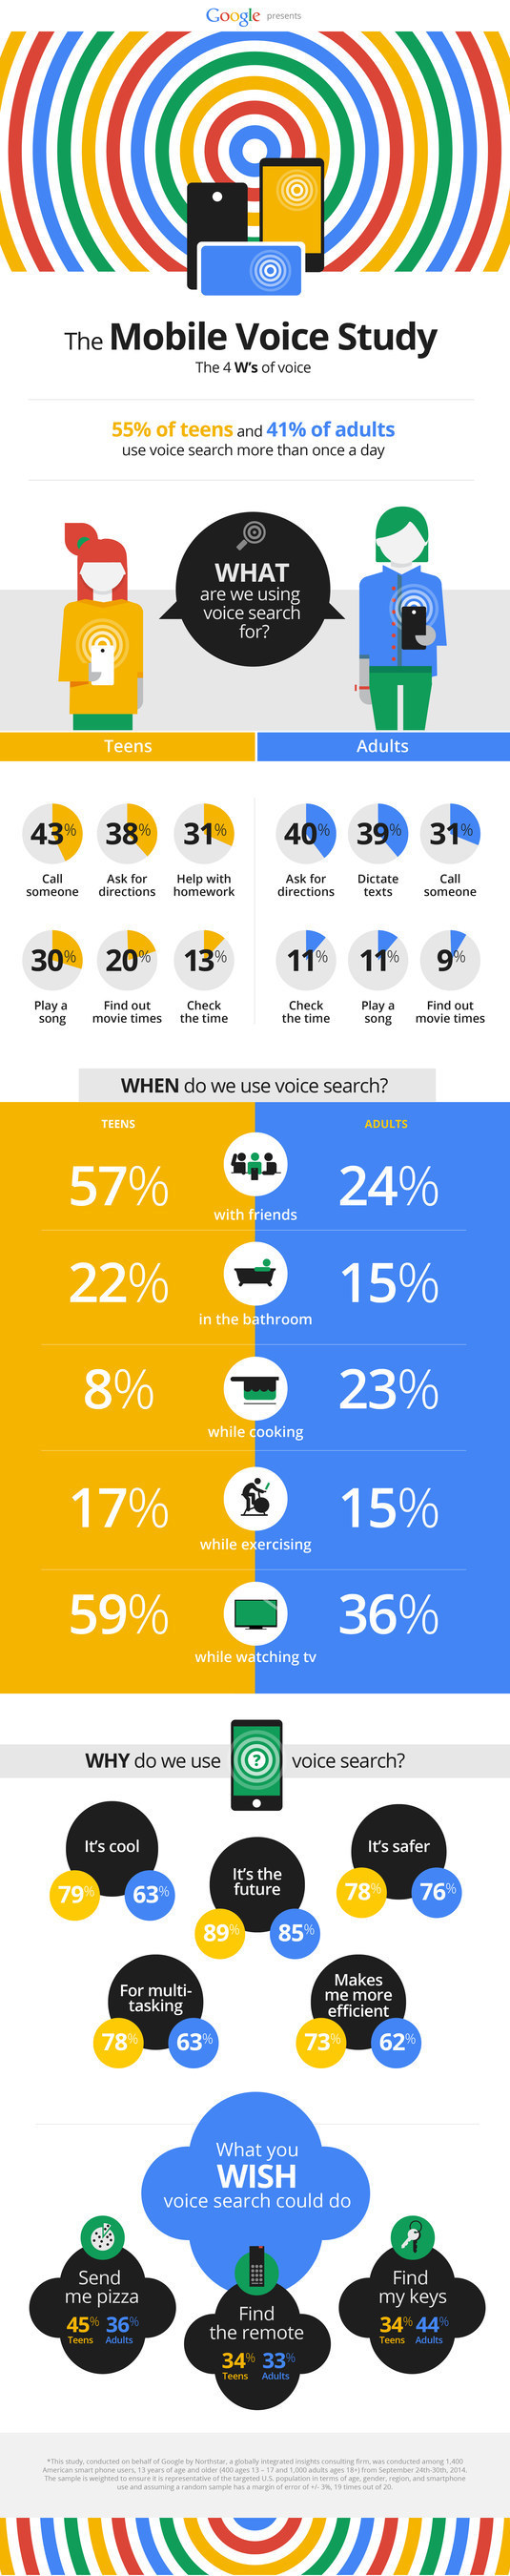 Google Mobile Voice Study Infographic (PRNewsFoto/Google Inc.)